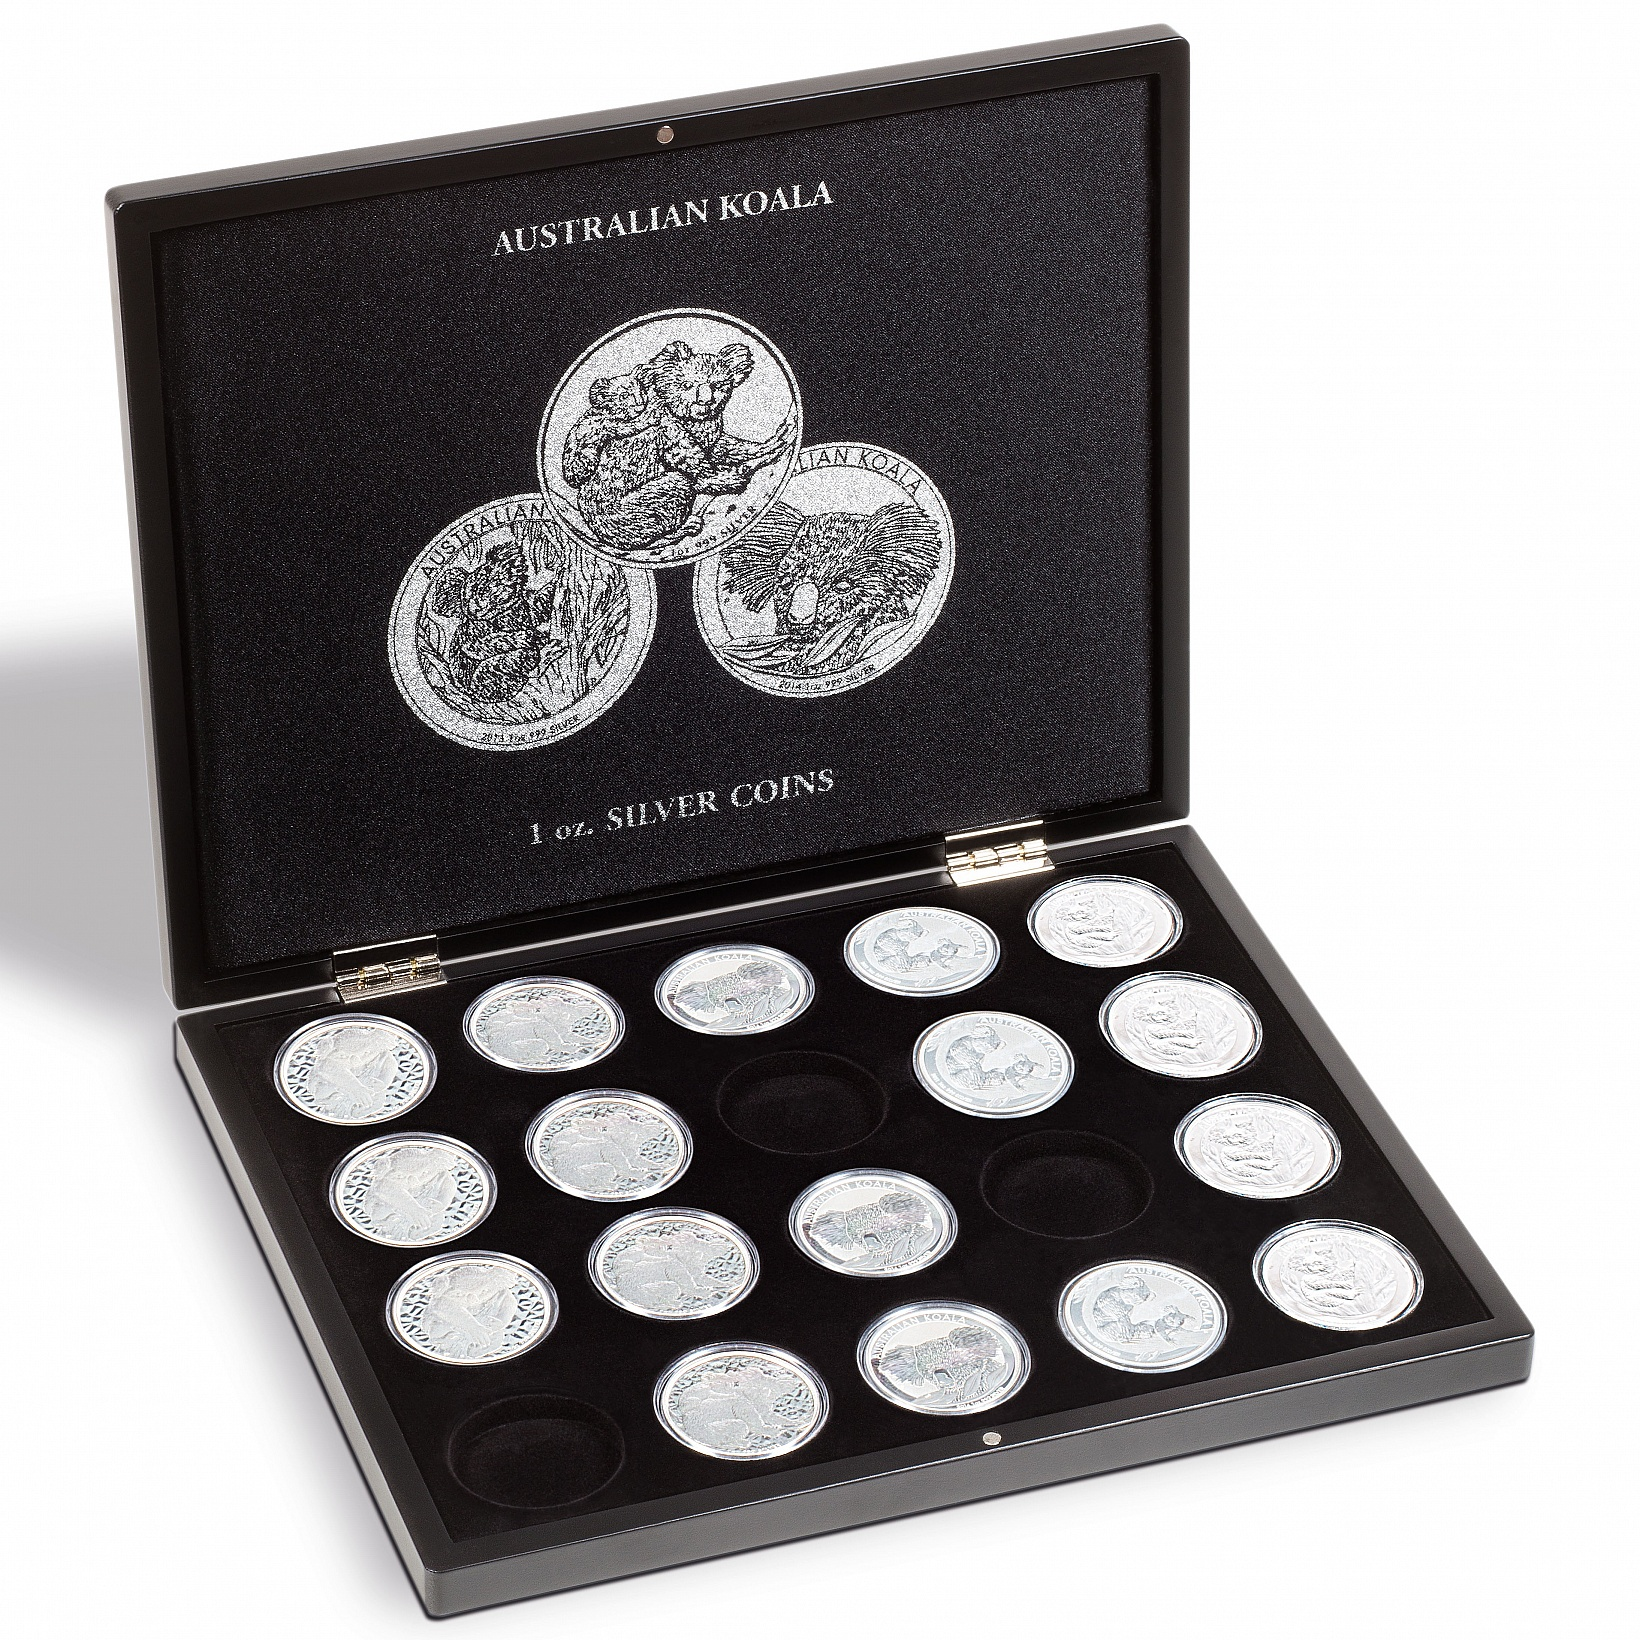   presentation-case-for-20-silver-koala-coins-in-capsules-black-2